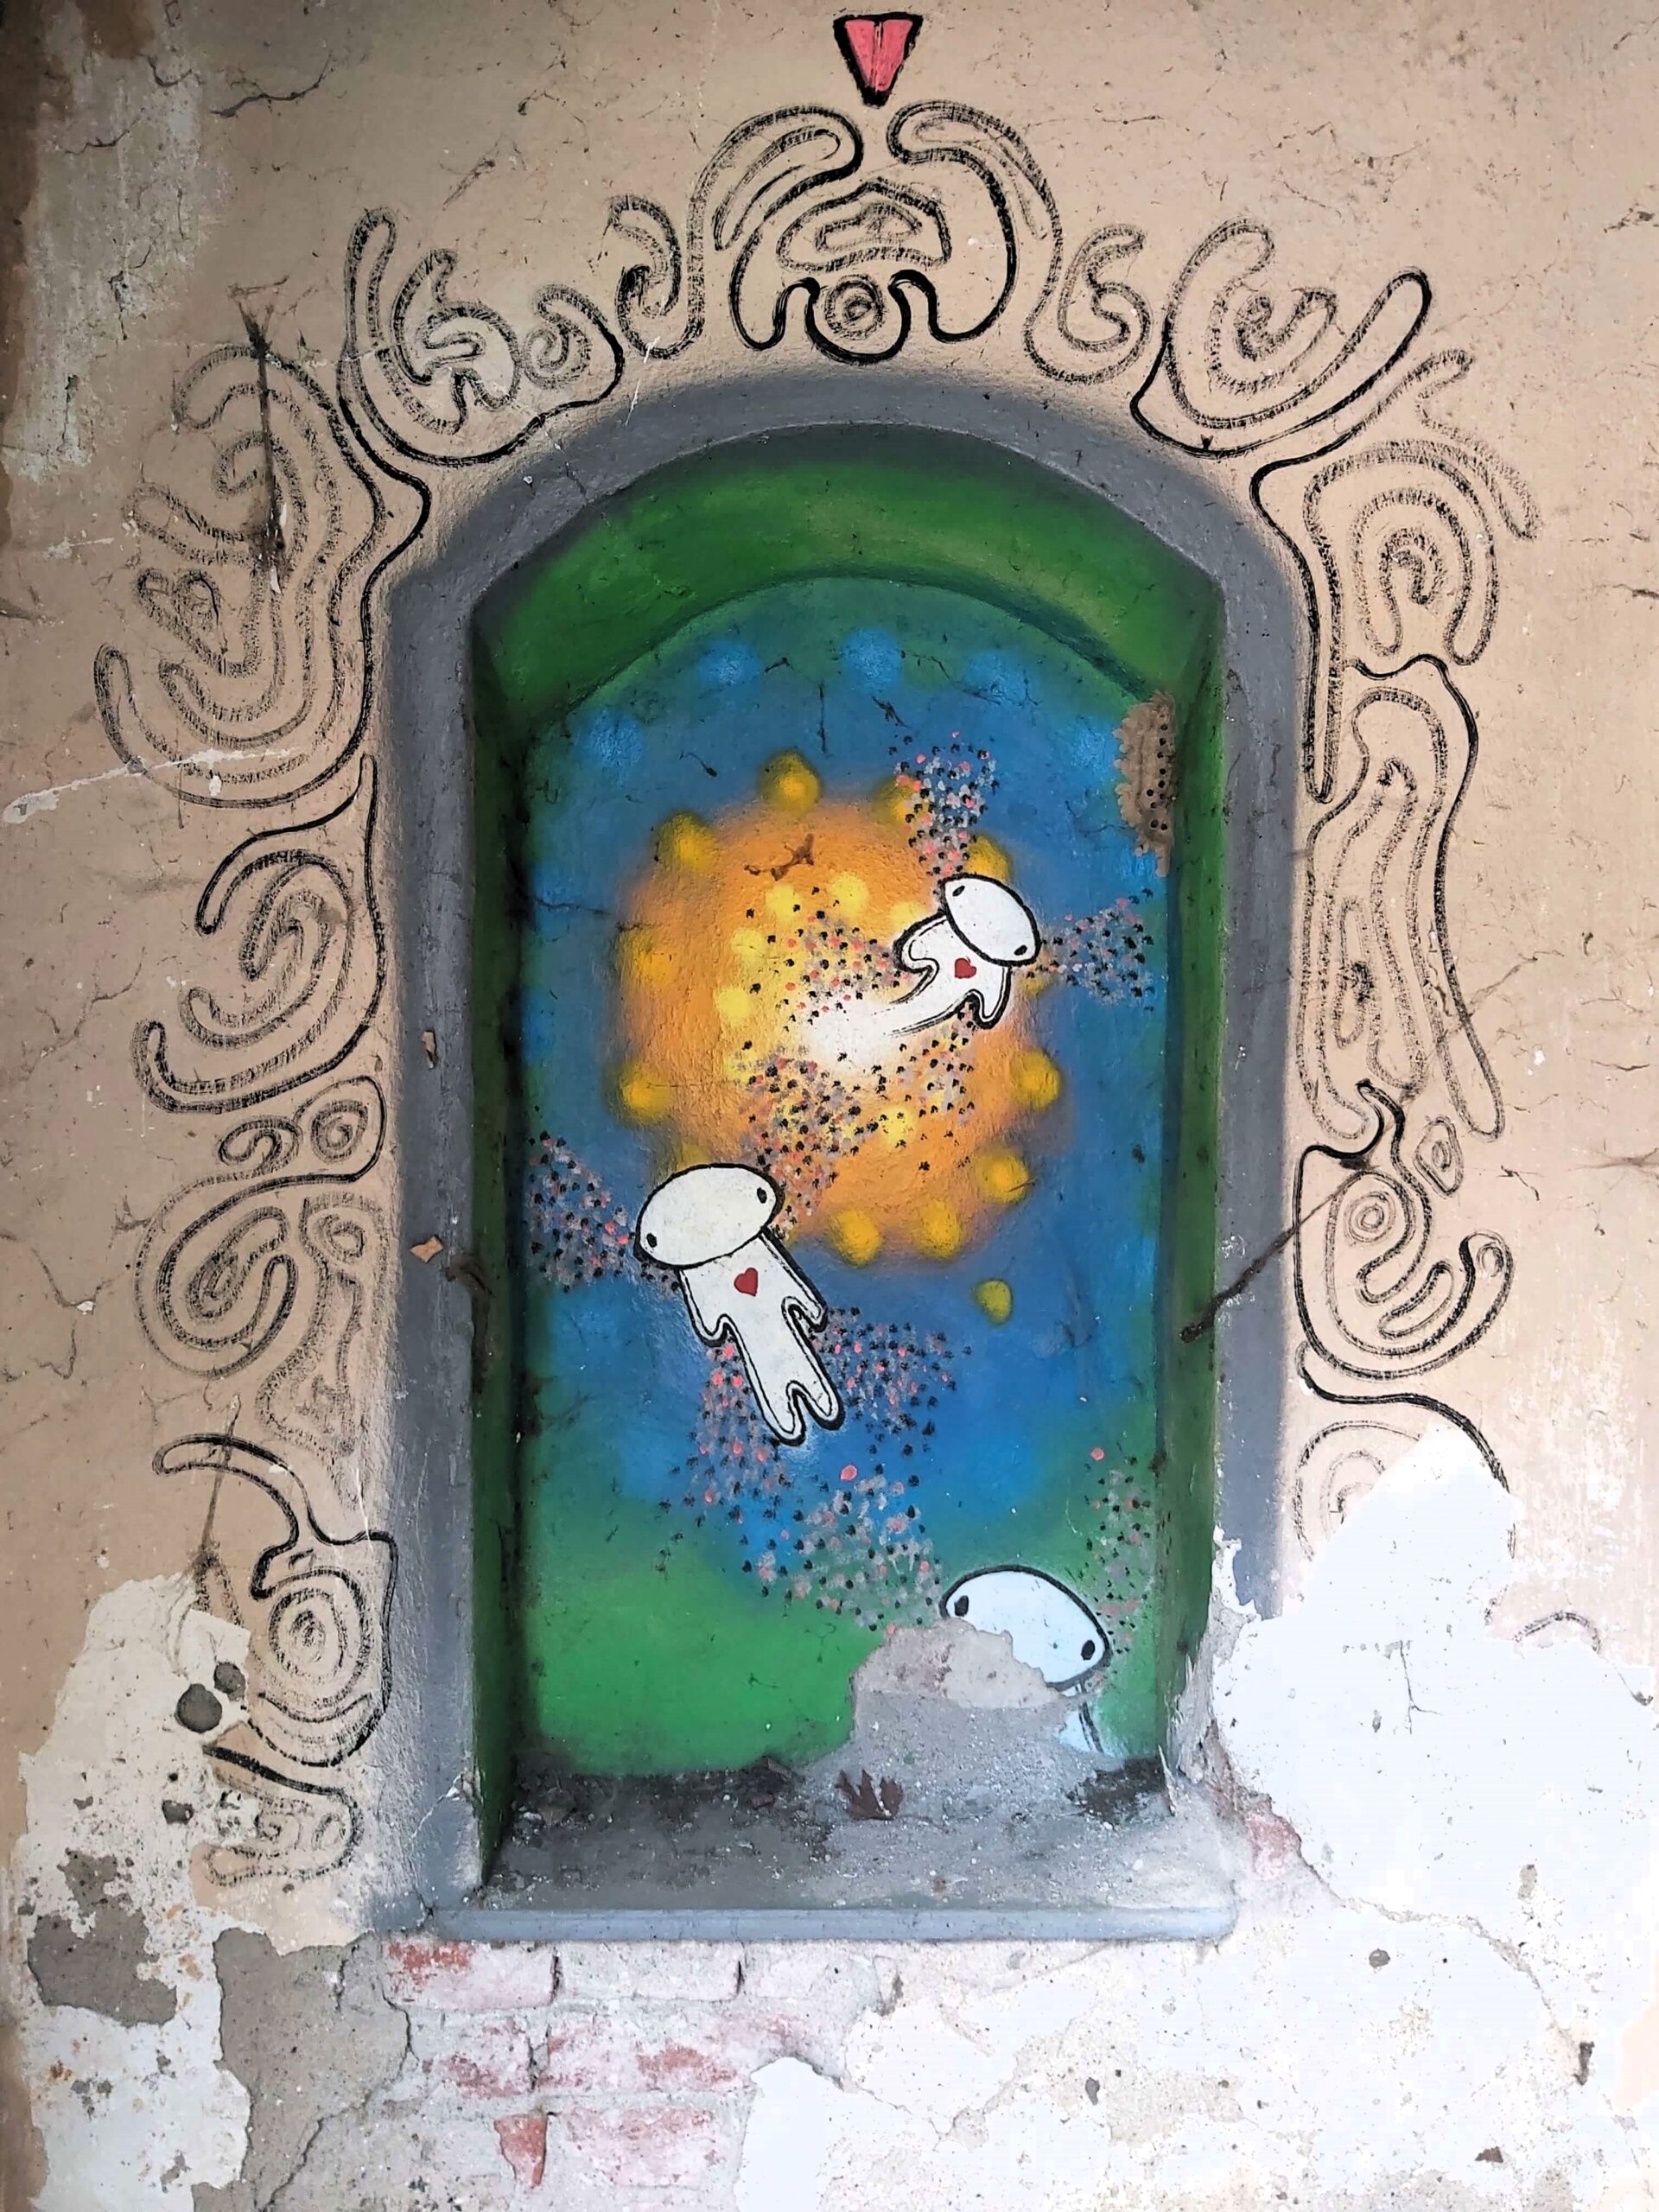 Graffiti in Timisoara, Romania. Flying ghosts